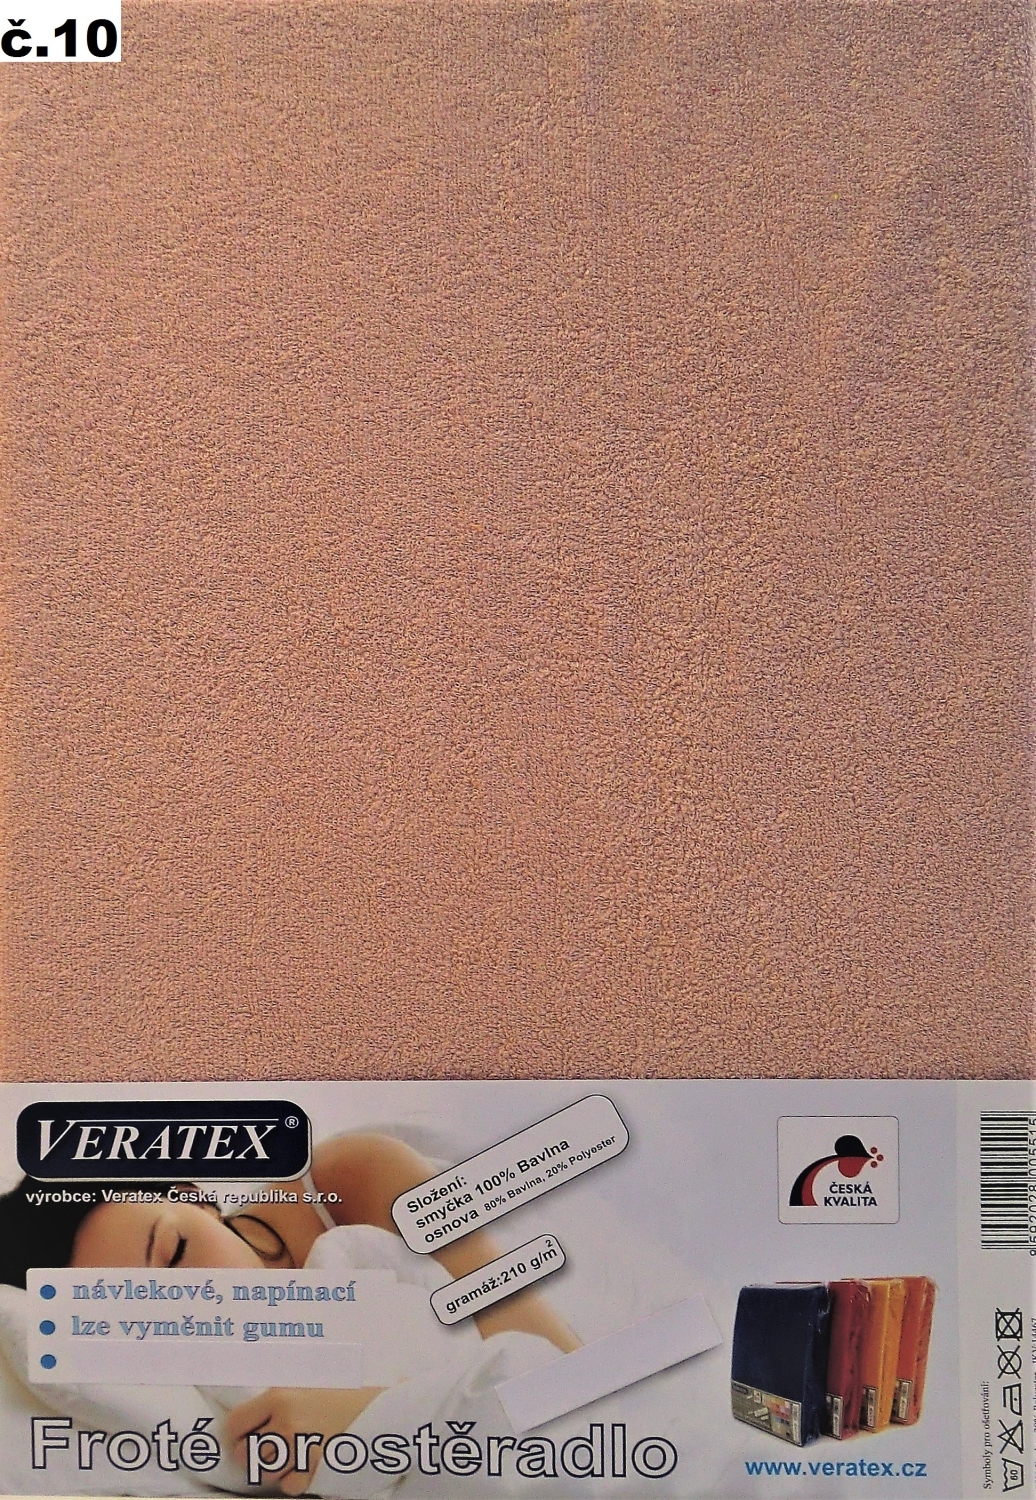 Veratex Froté prostěradlo 160x200 cm (č.10-starorůžová)